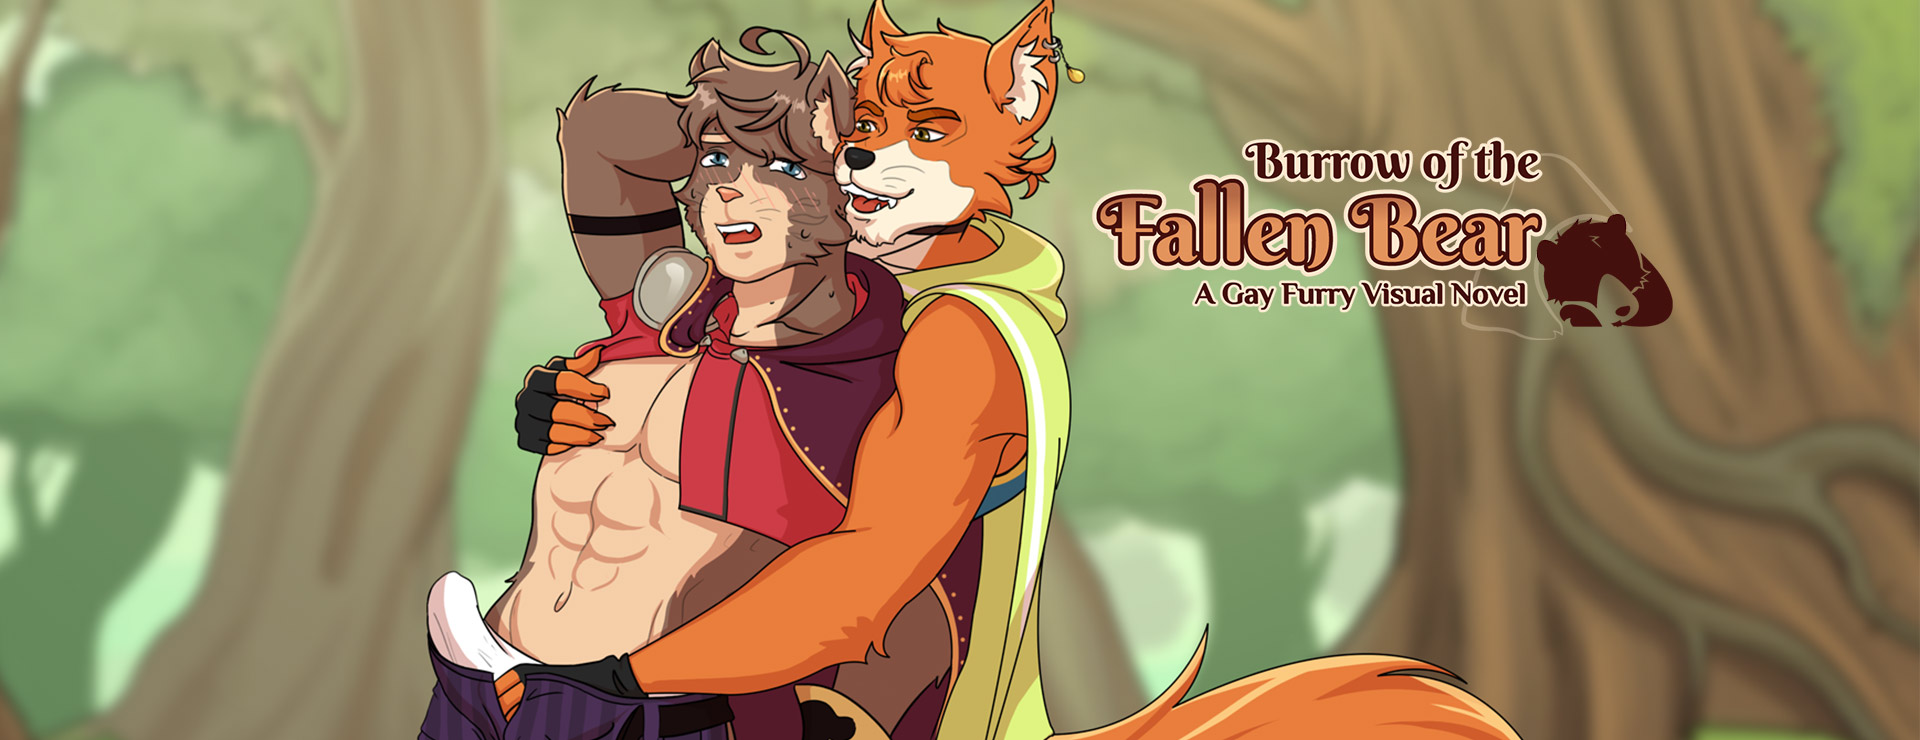 Burrow of the Fallen Bear - Japanisches Adventure Spiel